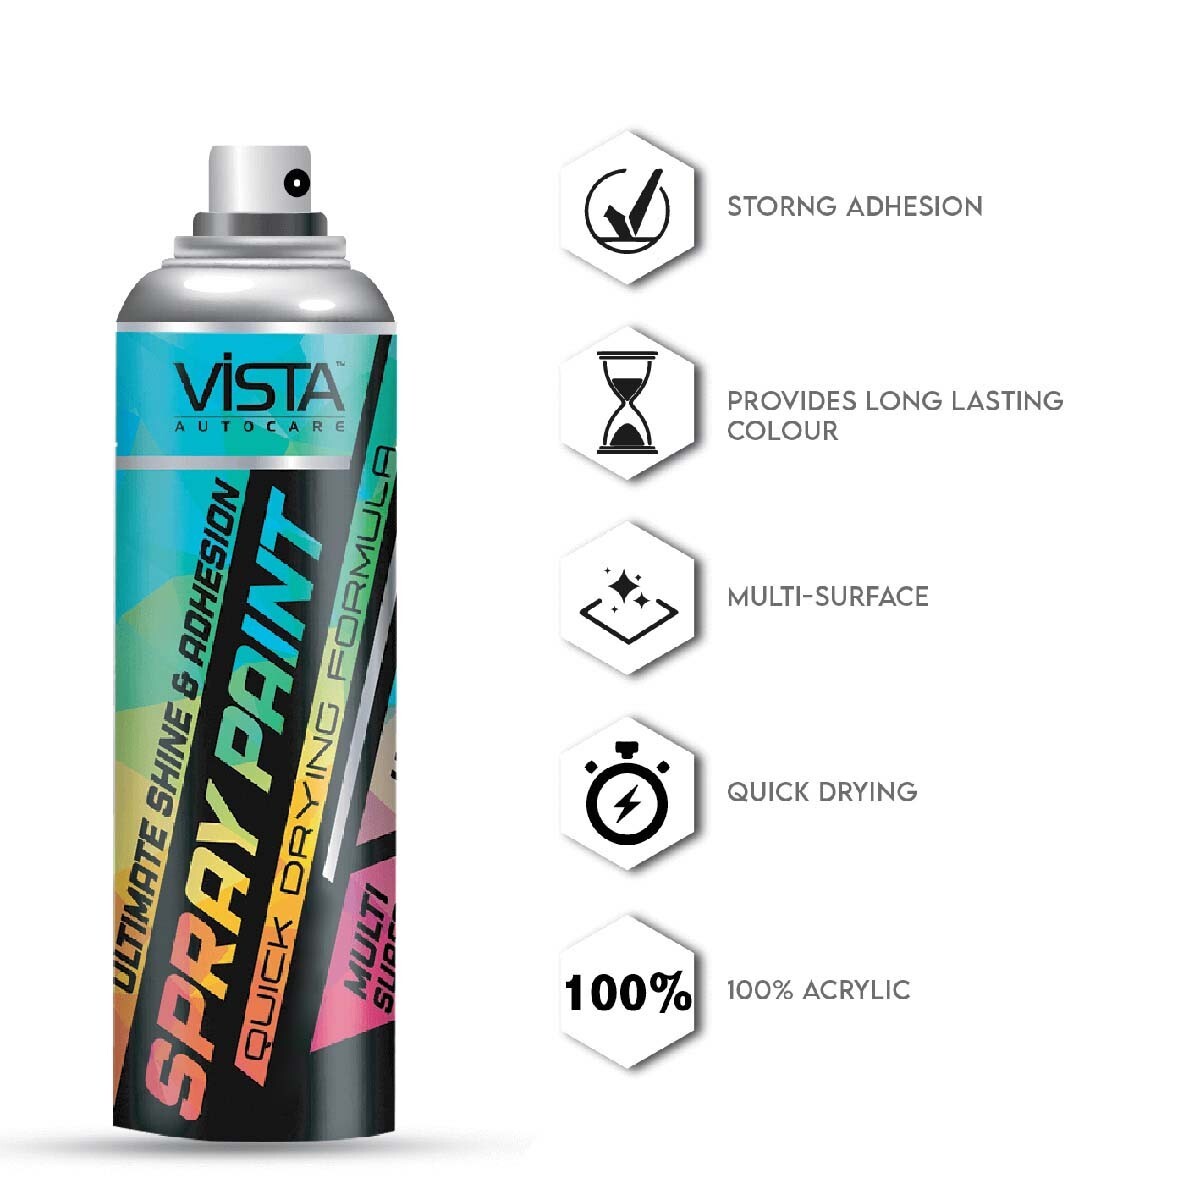 Vista Auto Care Spray Paint Black Matt 400Ml